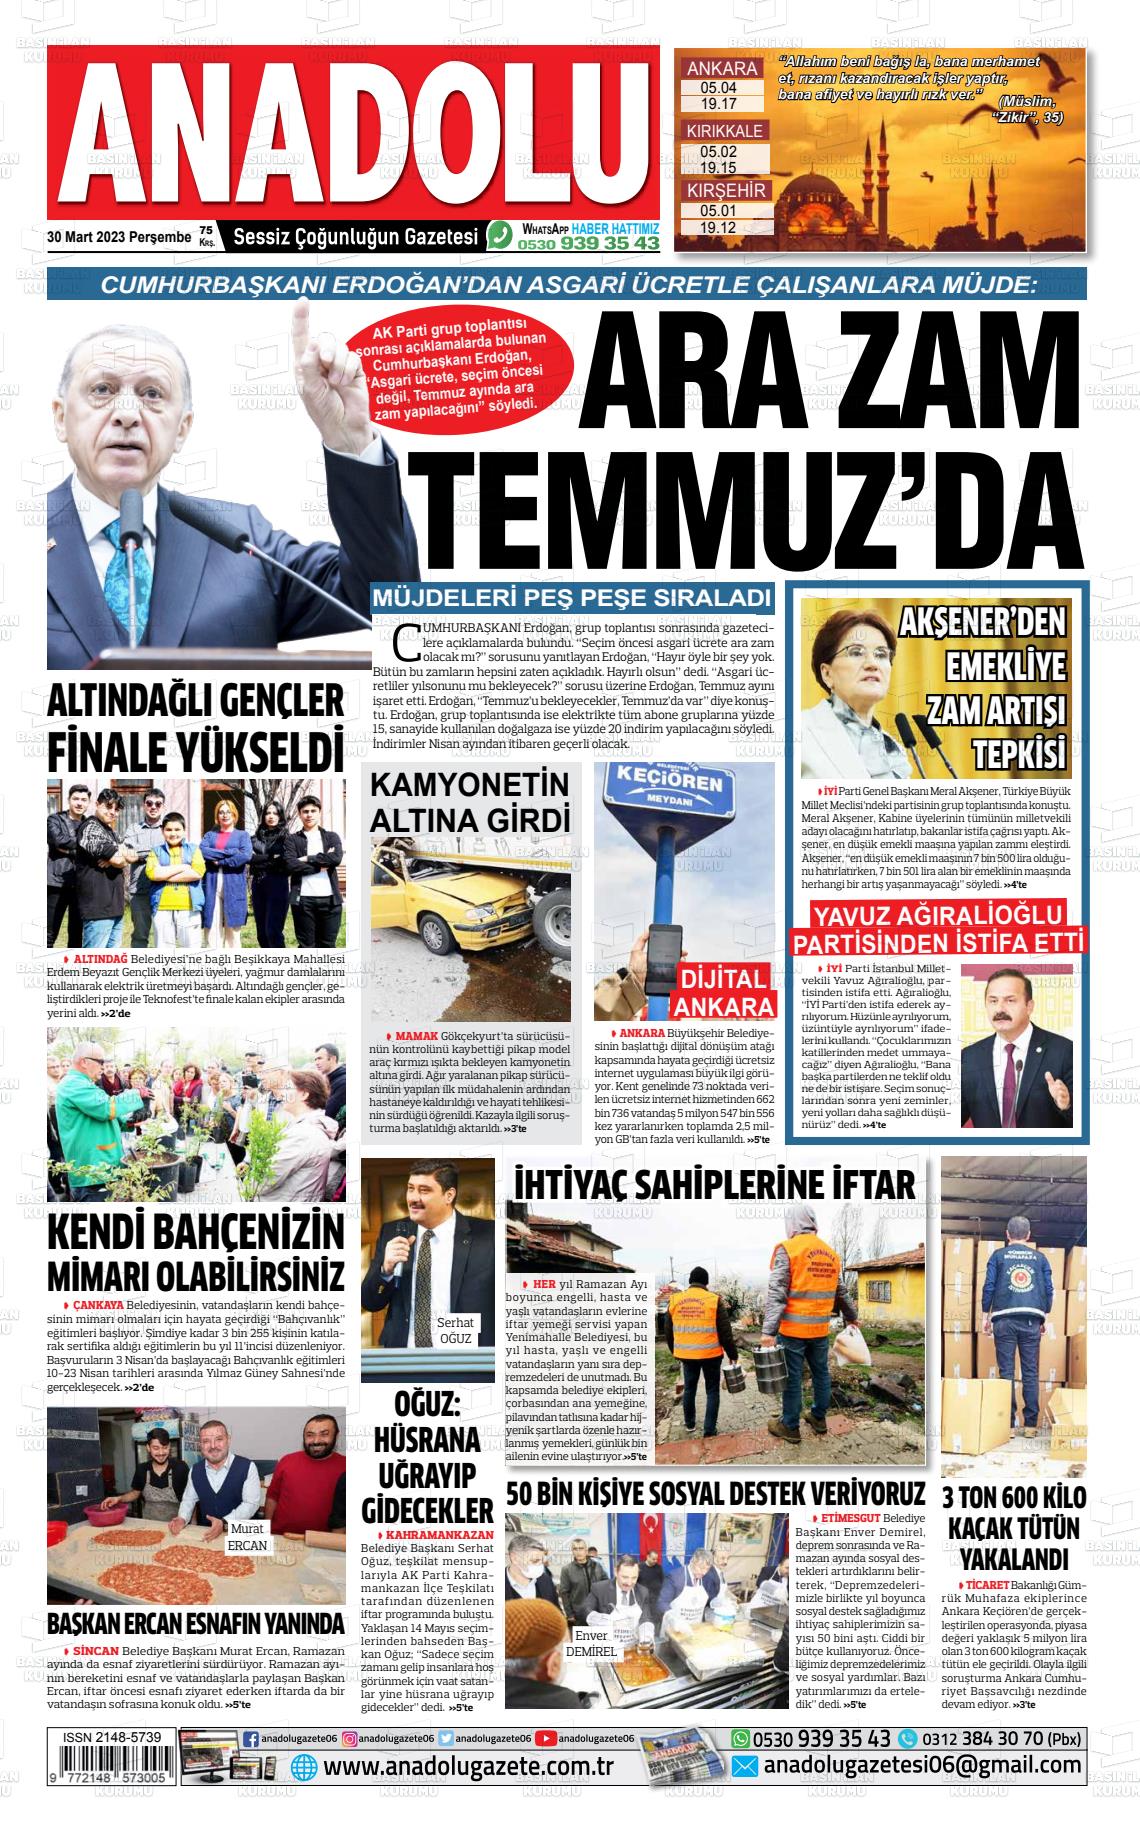 30 Mart 2023 Ankara Anadolu Gazete Manşeti